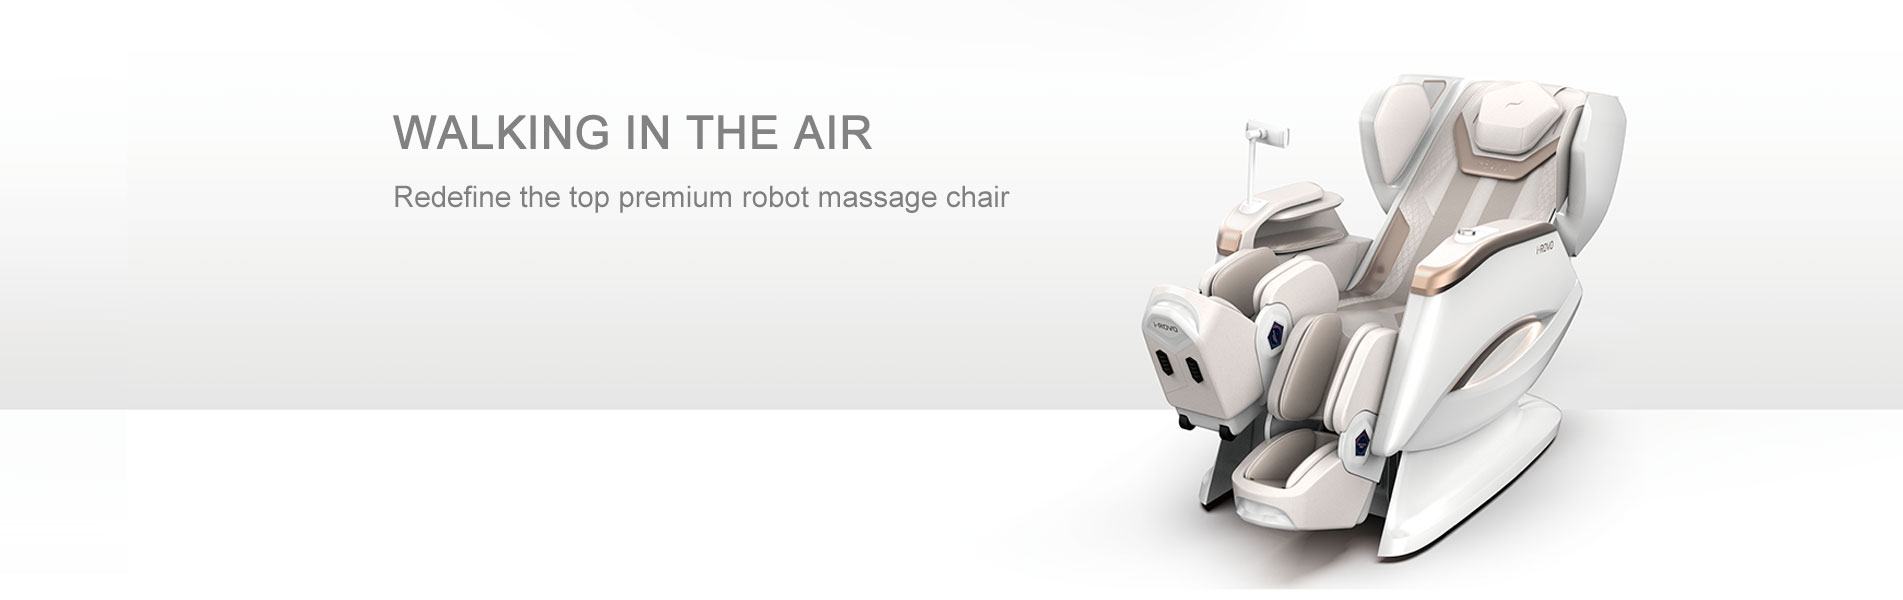 Revolution Top Walking Robot Massage Chair